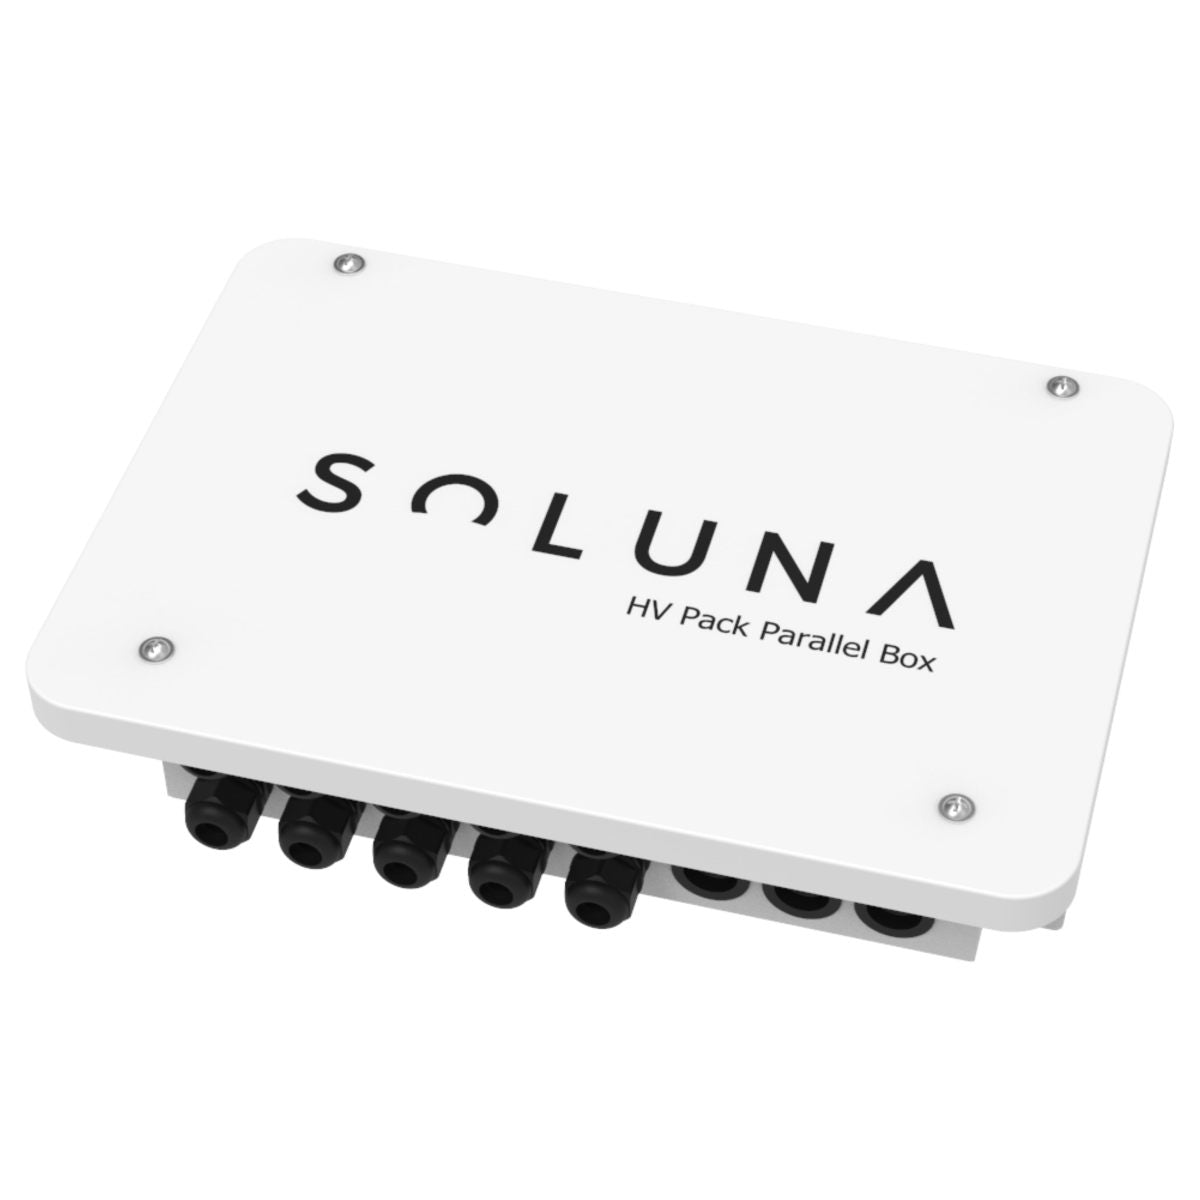 Soluna HV Parallel Box